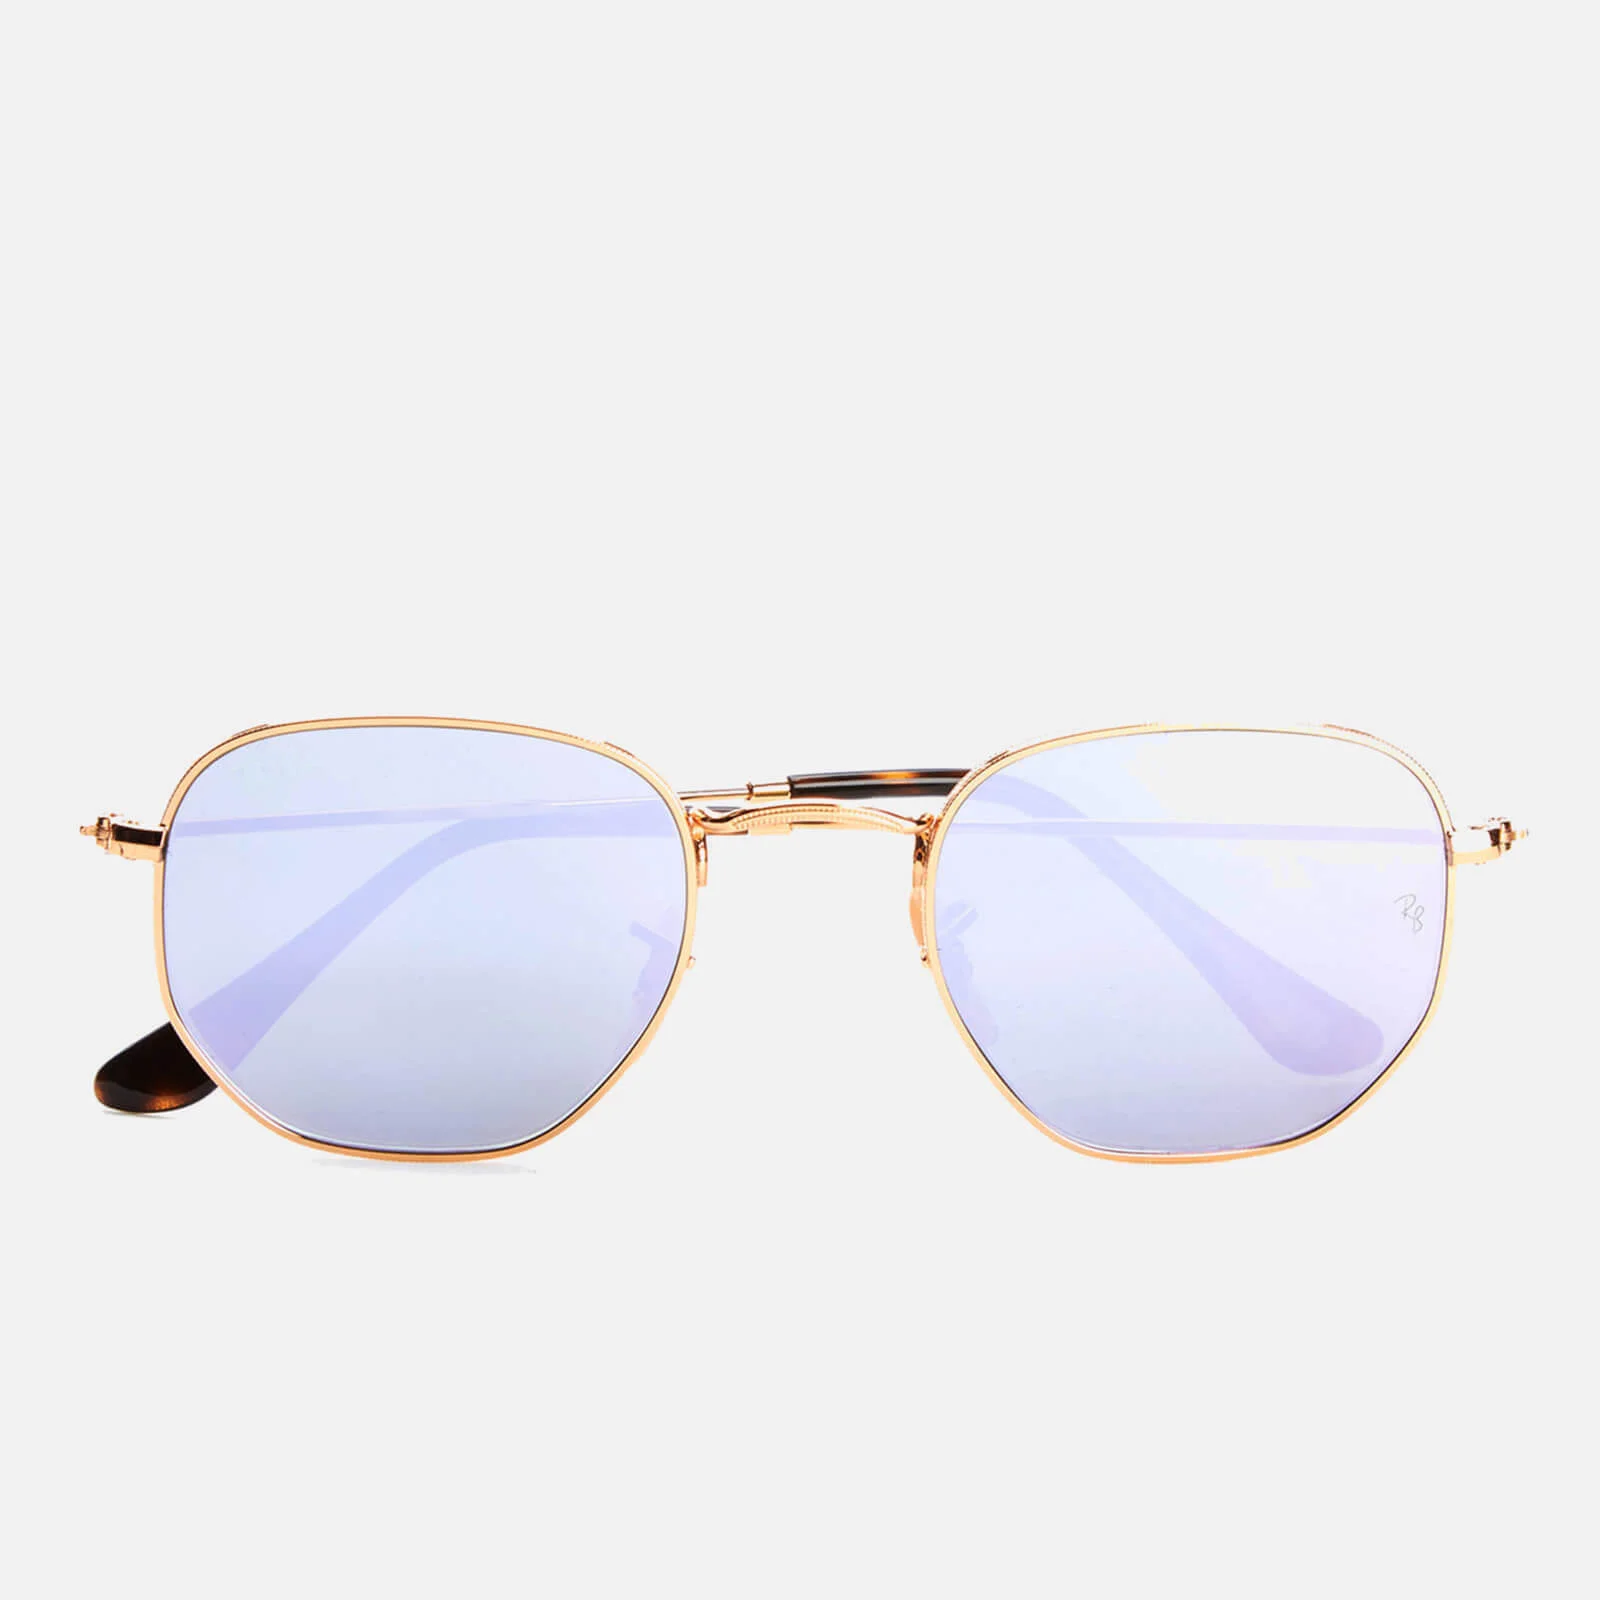 Ray-Ban Hexagonal Metal Frame Sunglasses - Gold/Wisteria Flash Image 1